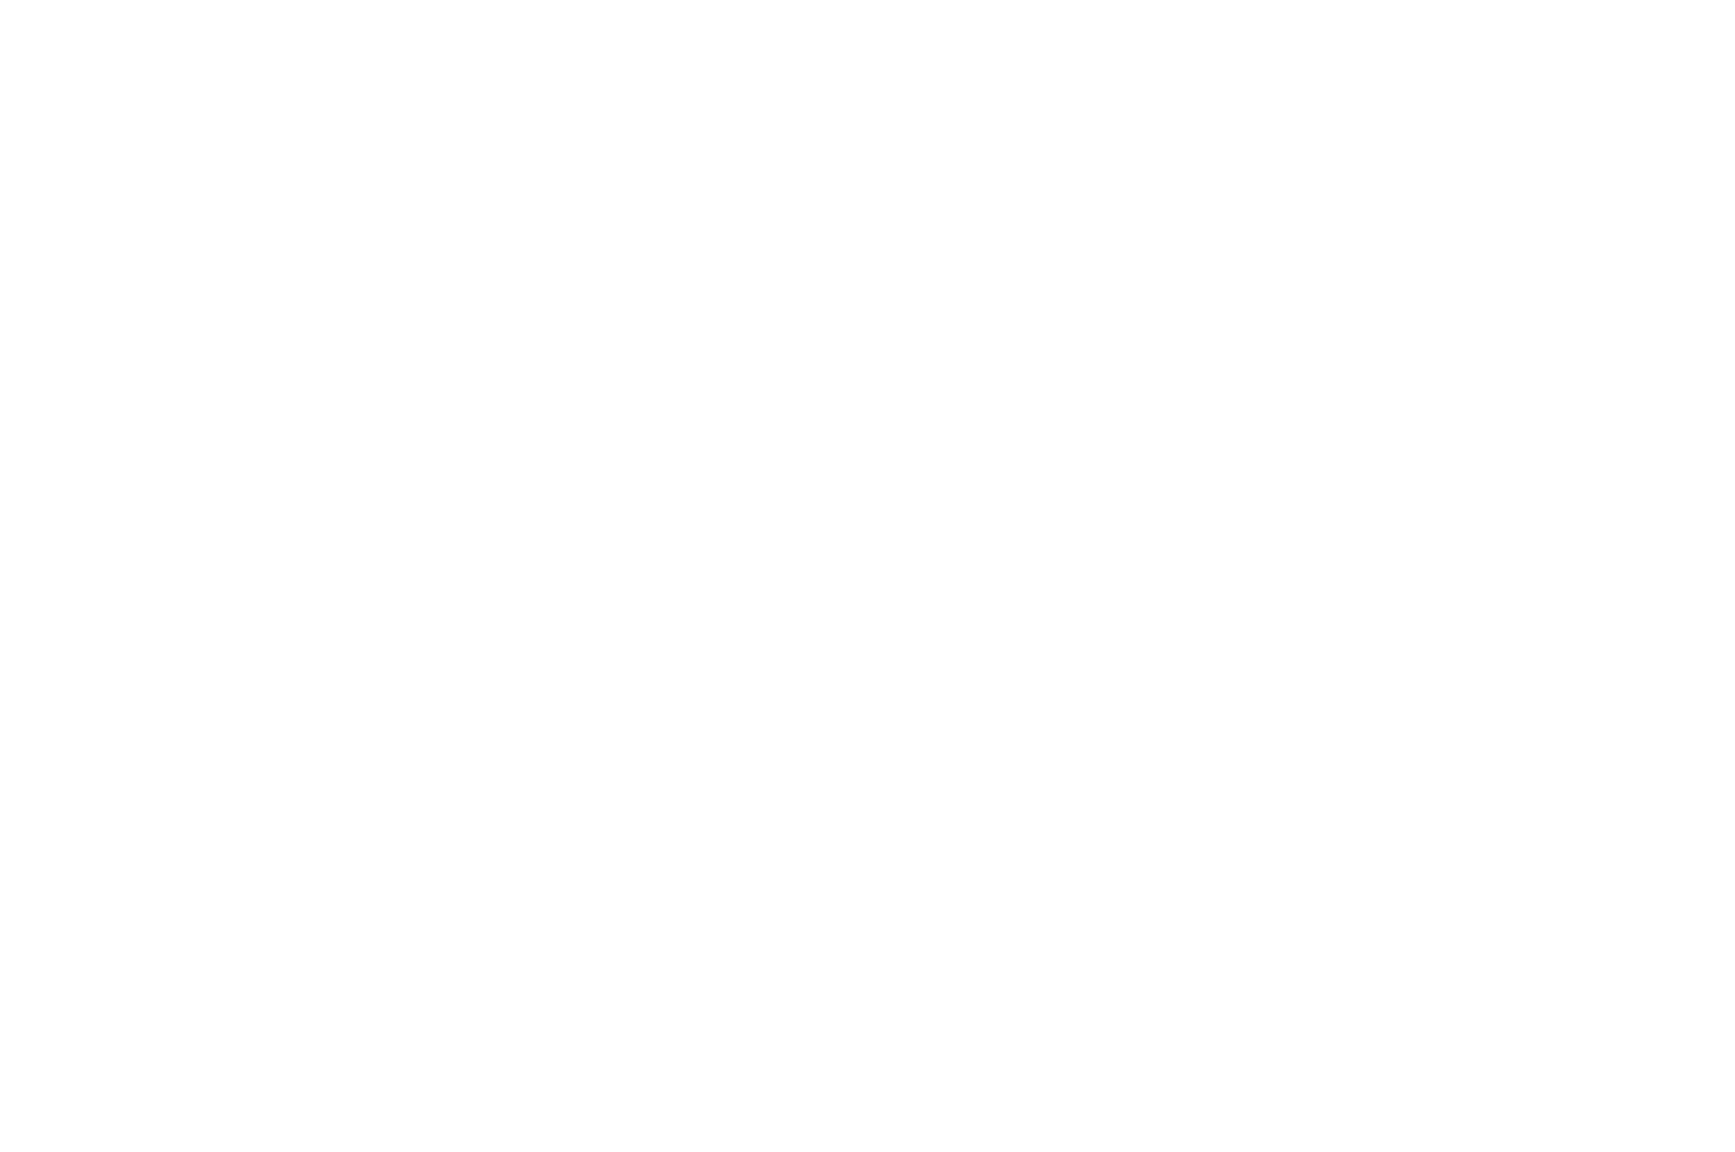 OFFICIAL-SELECTION-Chatham-Kent-International-Film-Festival-2023